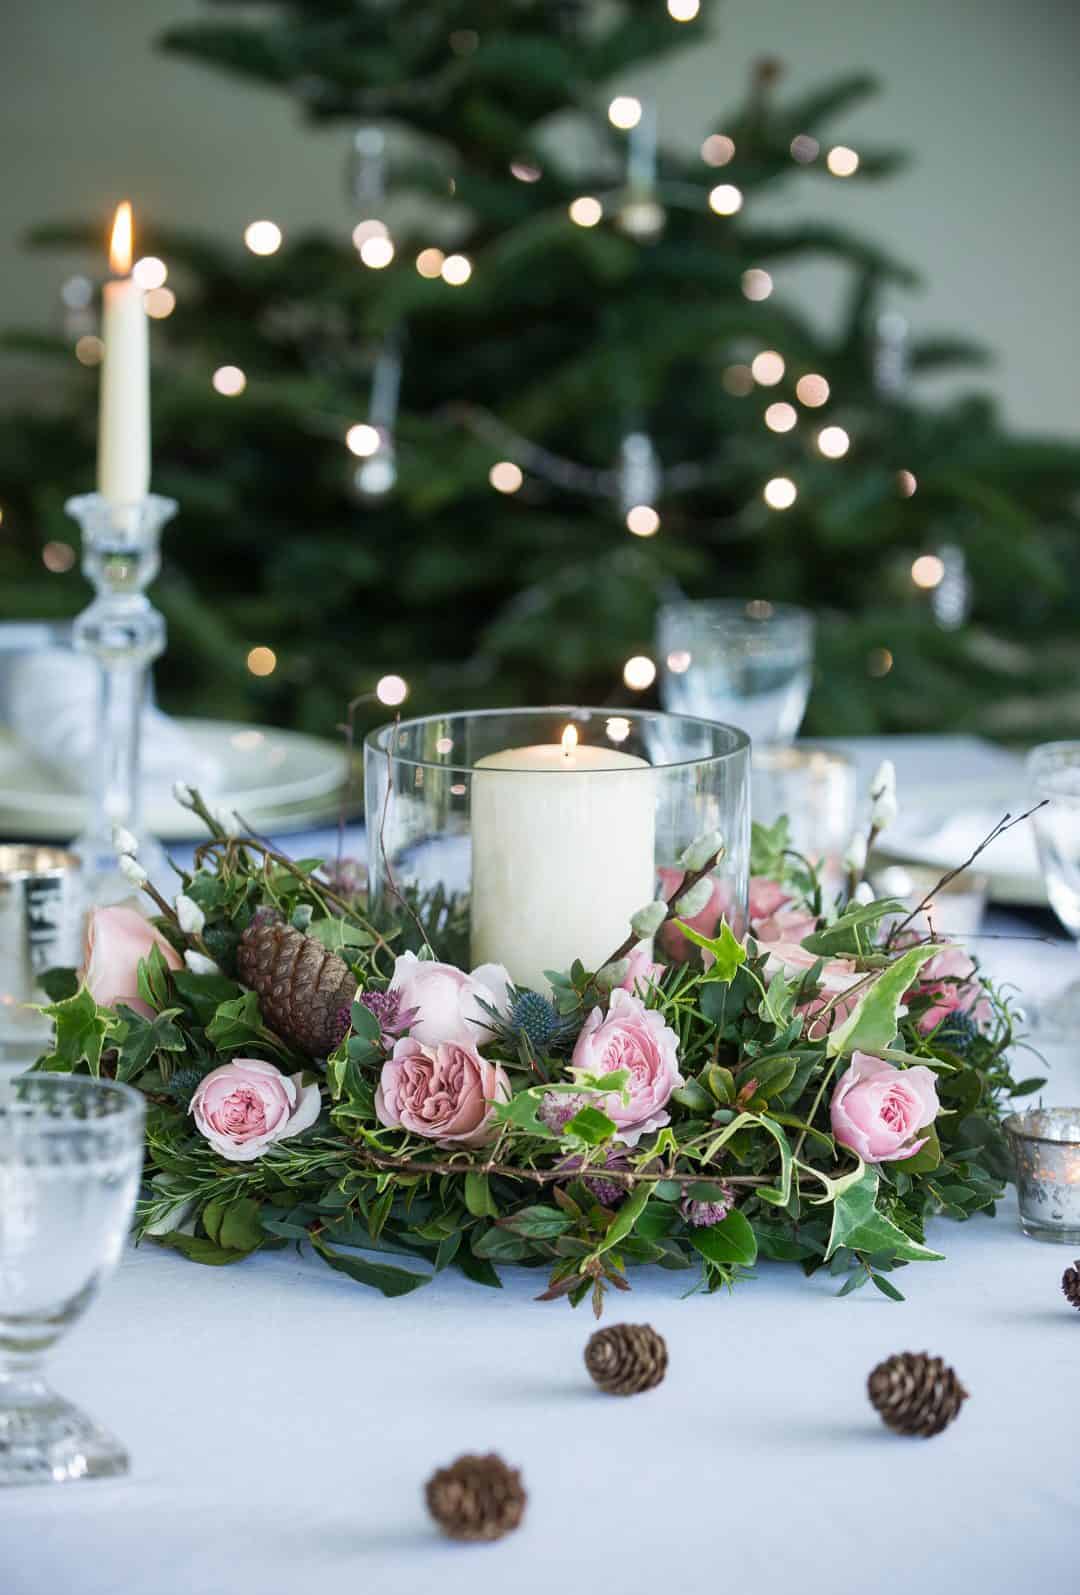 A handmade floral arrangement as a centerpiece for Christmas